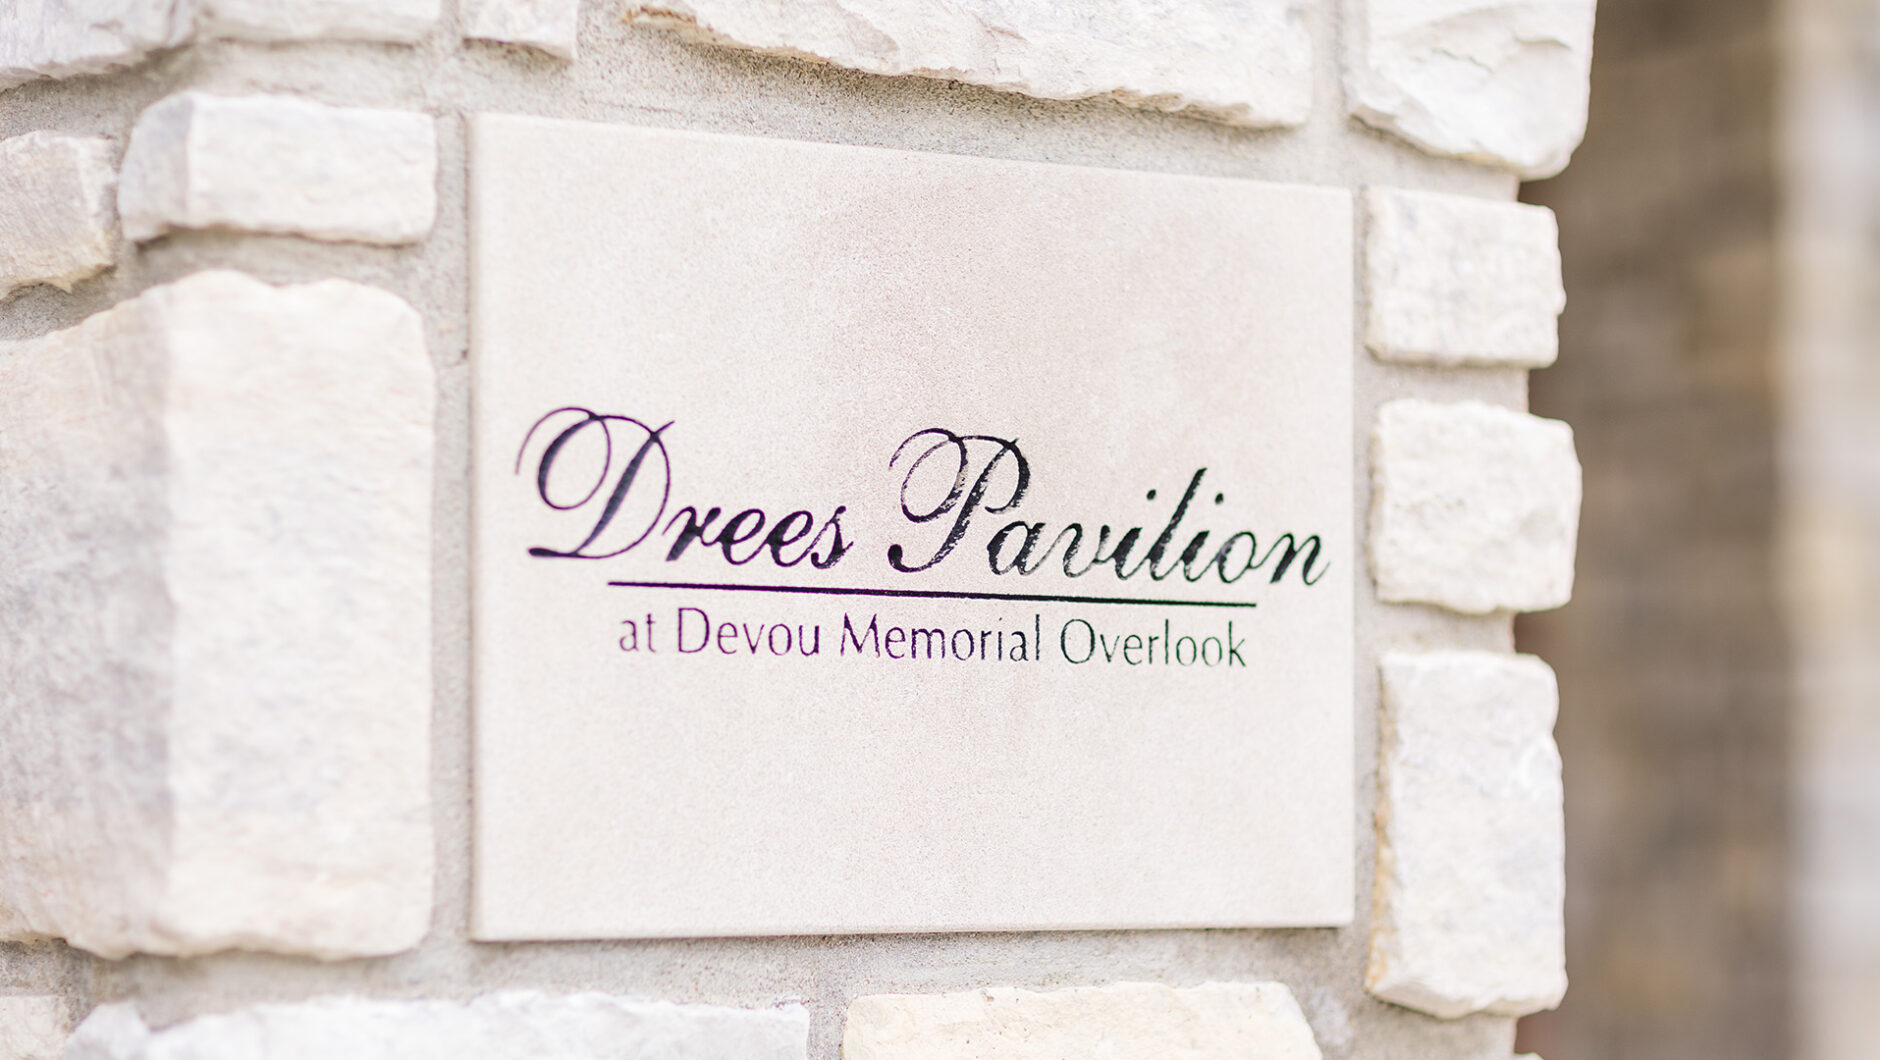 Drees Pavilion at Devou Memorial Overlook sign in stone